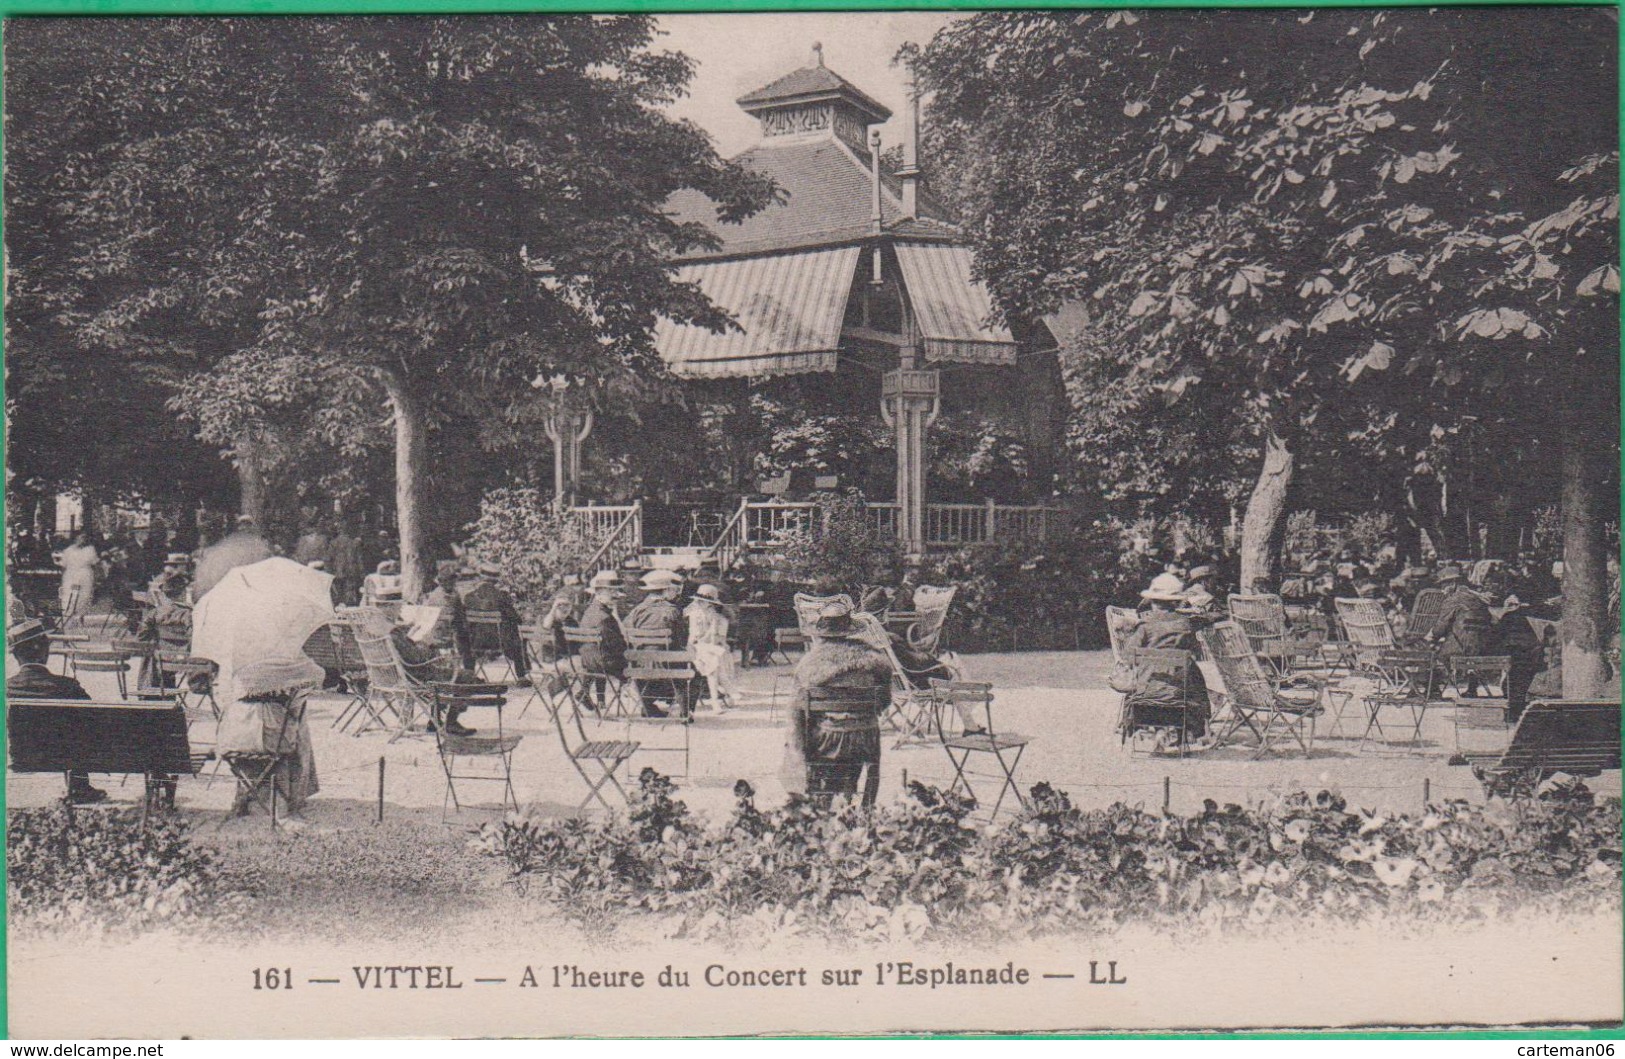 88 - Vittel - A L'heure Du Concert Sur L'Esplanade - Editeur: LL N°161 - Vittel